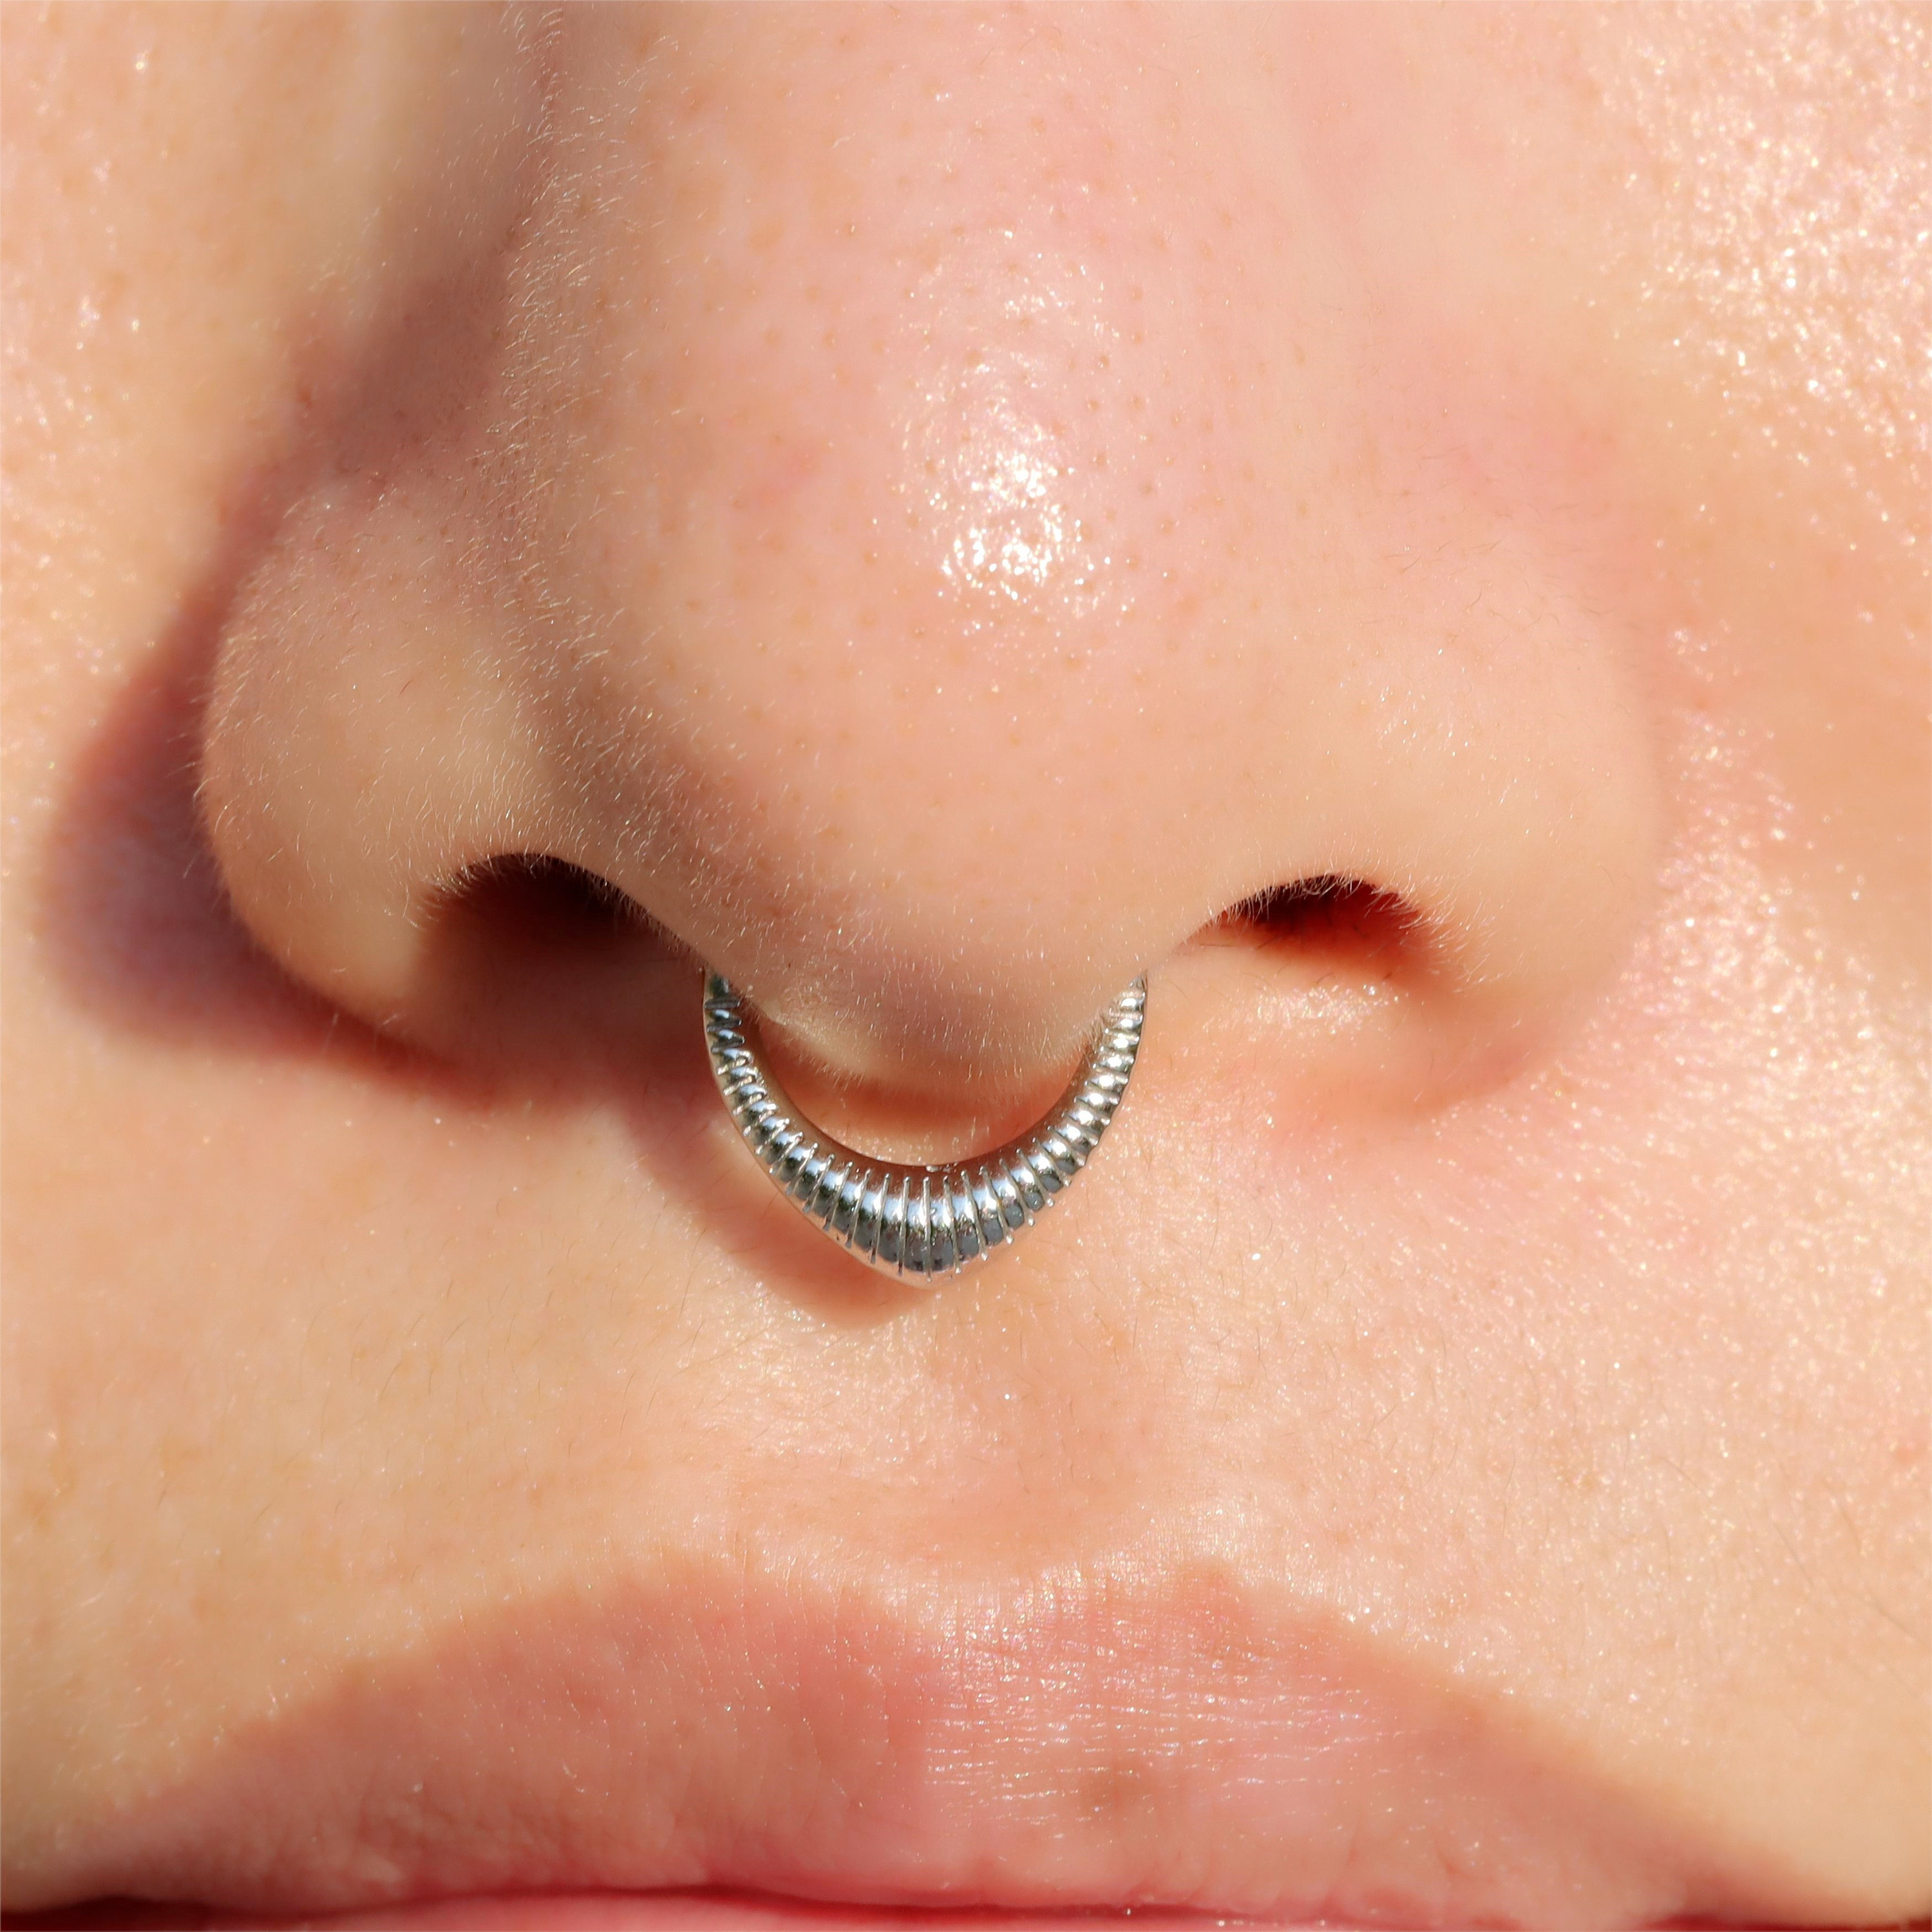 Eka Red Coral septum ring for pierced nose - 925 sterling silver | Tribalik